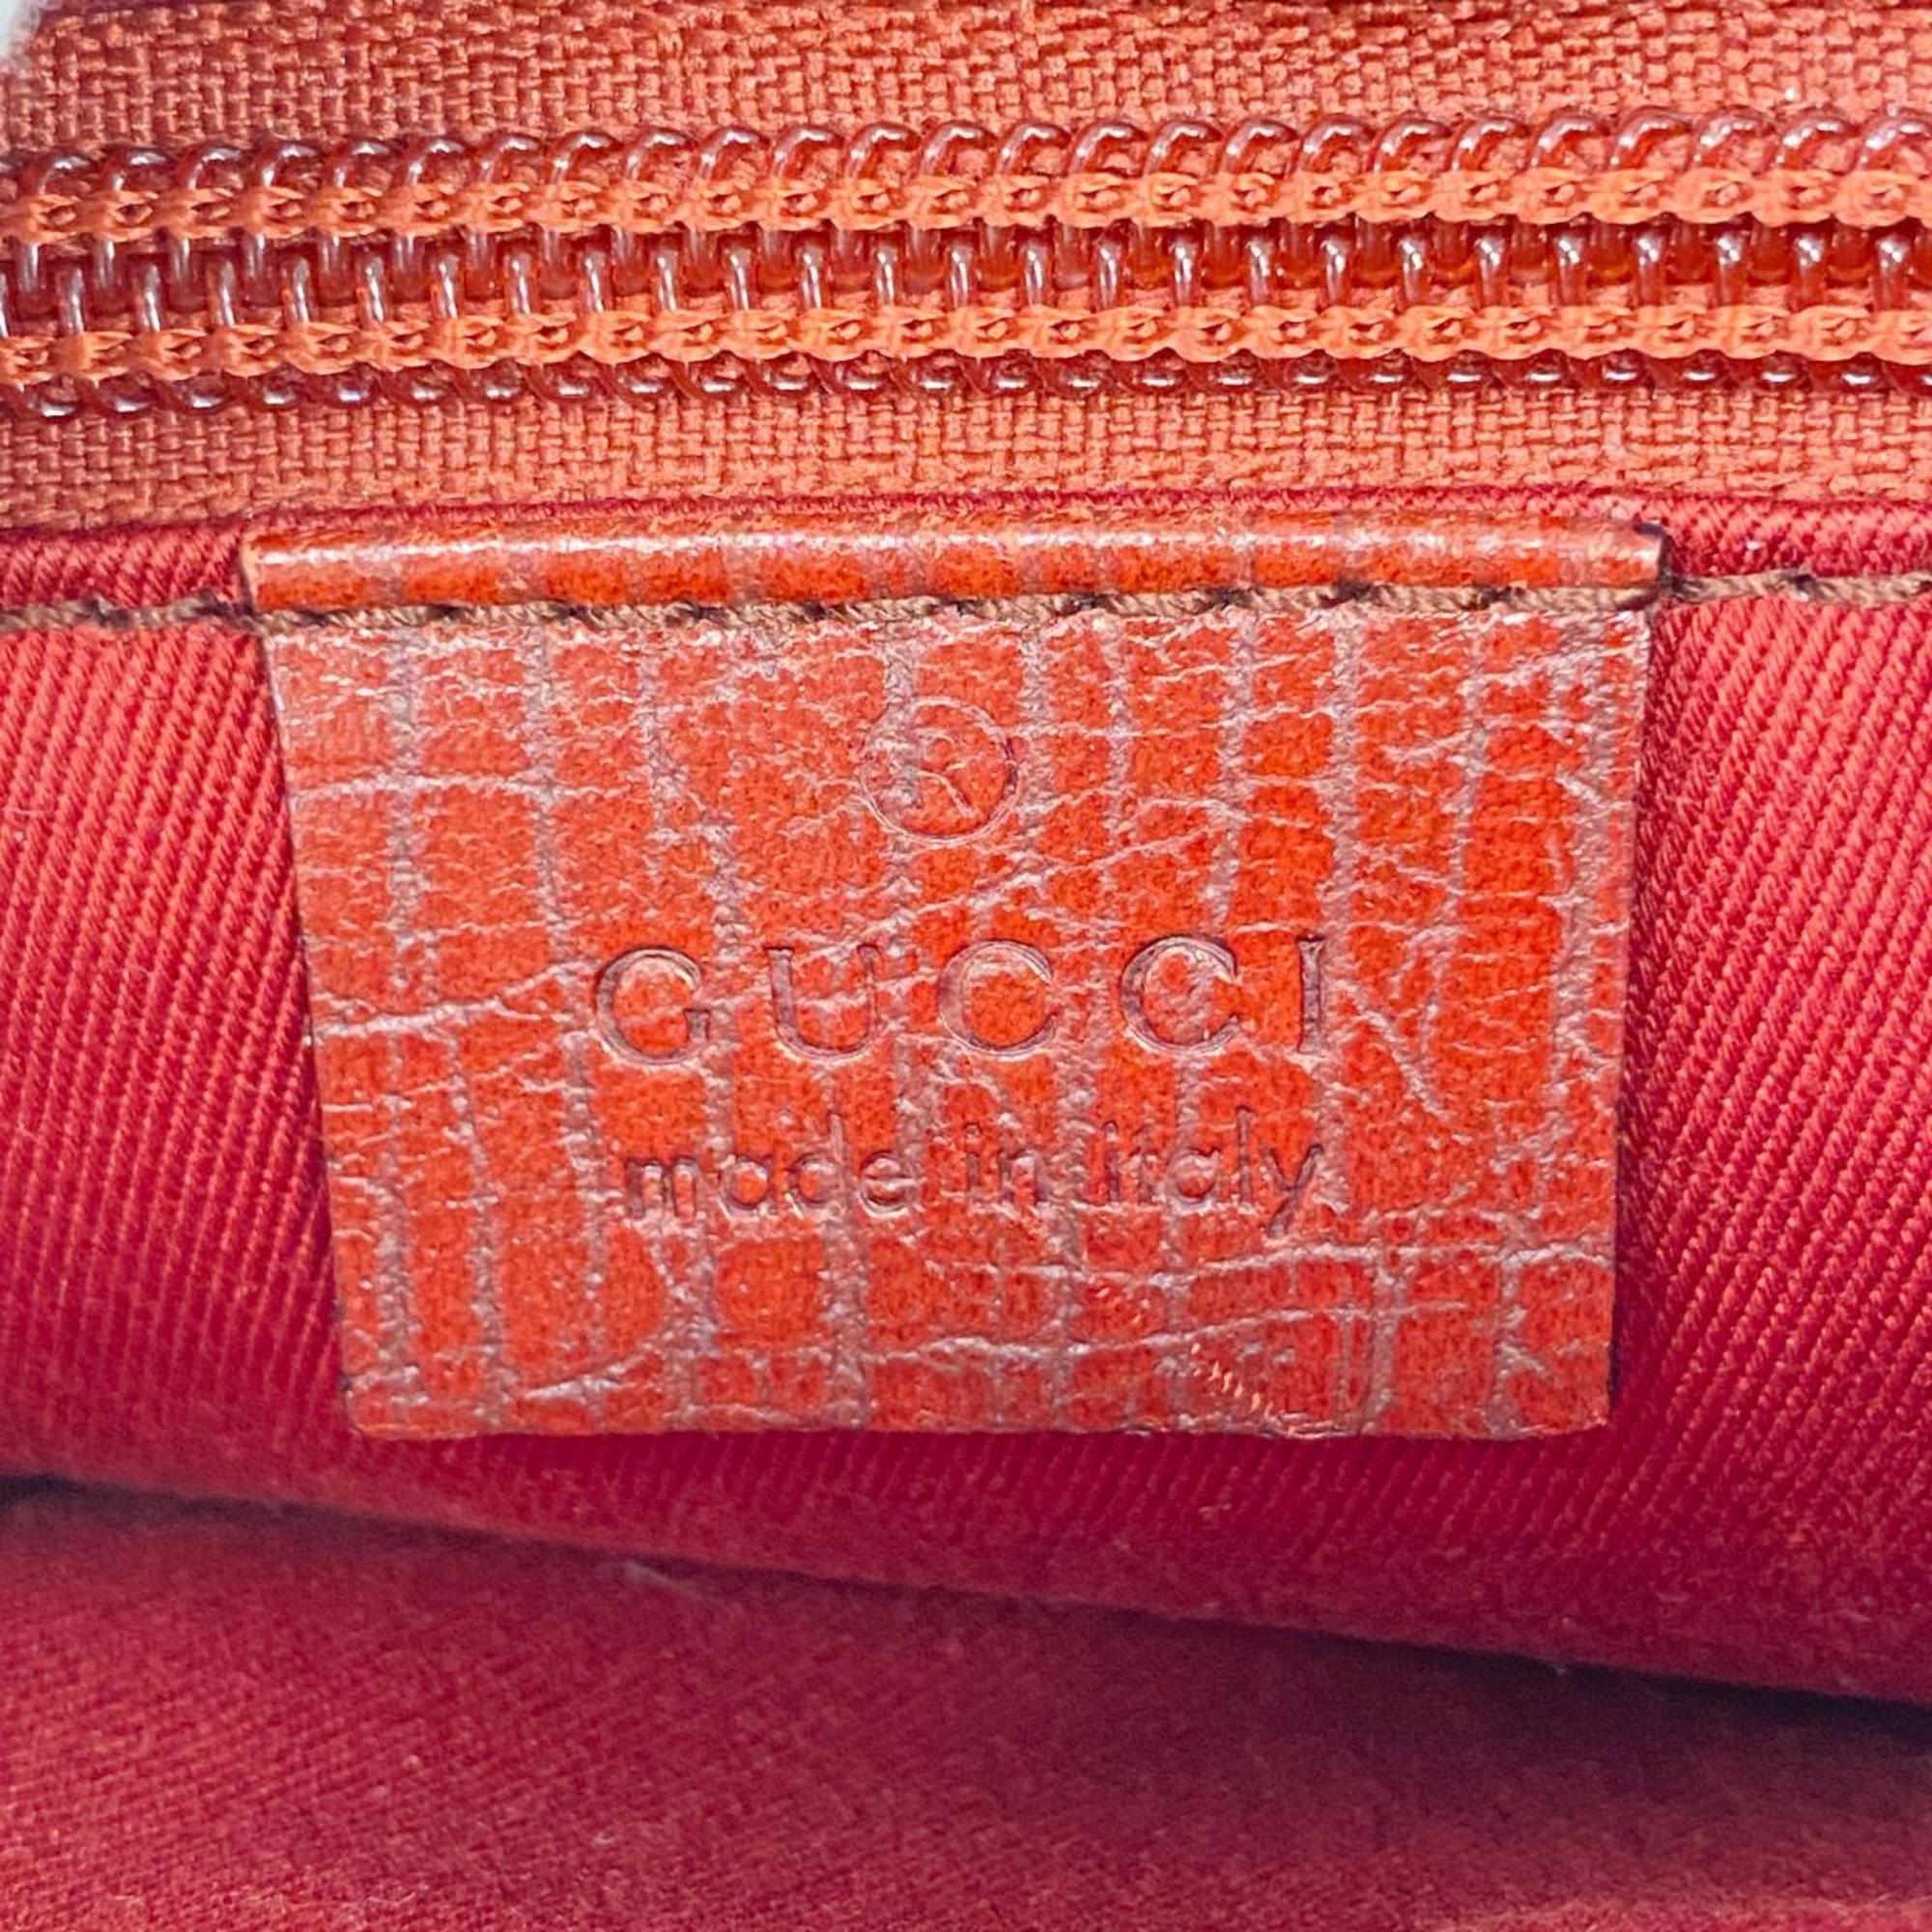 Gucci Handbag GG Supreme 114599 Beige Red Women's